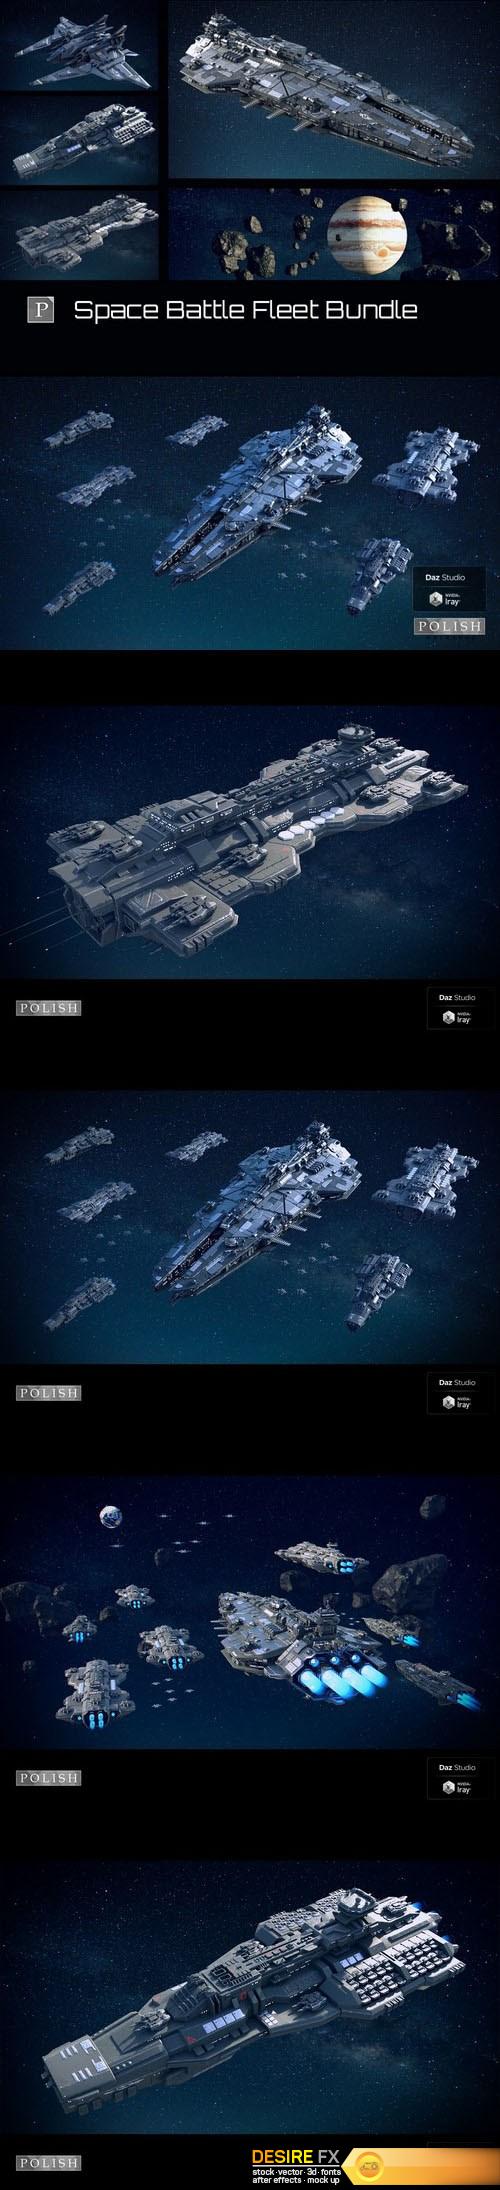 Space Battle Fleet Bundle